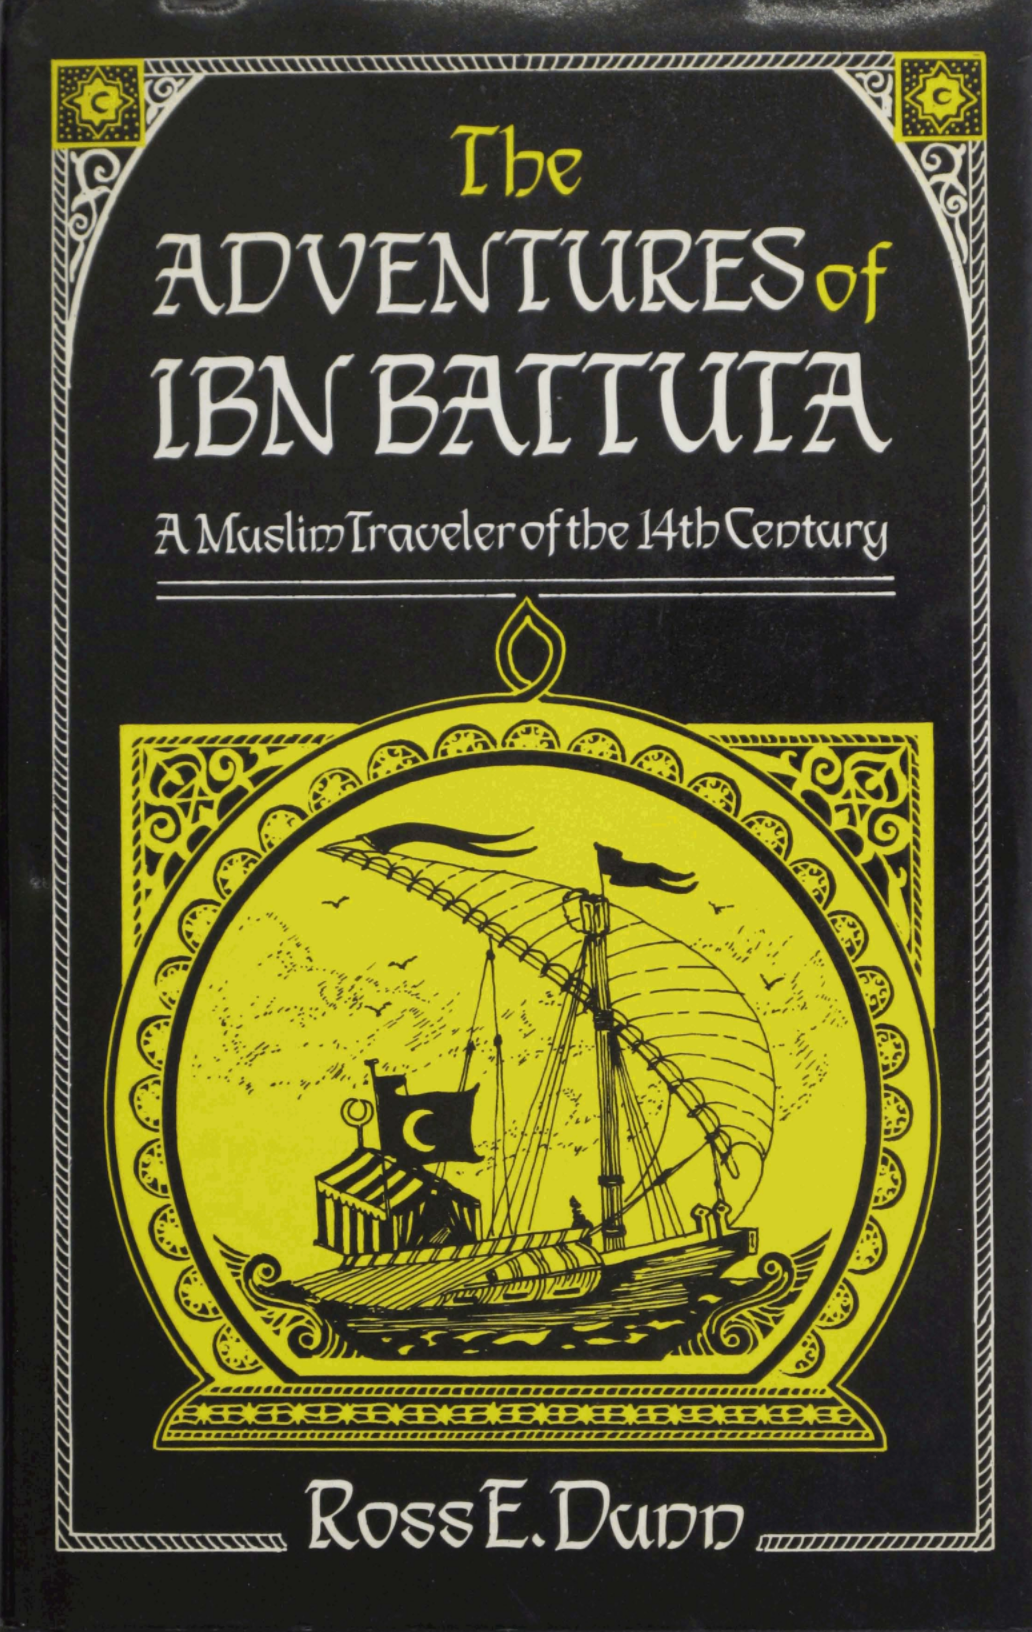 The Adventures of Ibn Battuta: A Muslim Traveller of the 14th Century by Ross E. Dunn. Univ of California Pr,1990 (PDF)